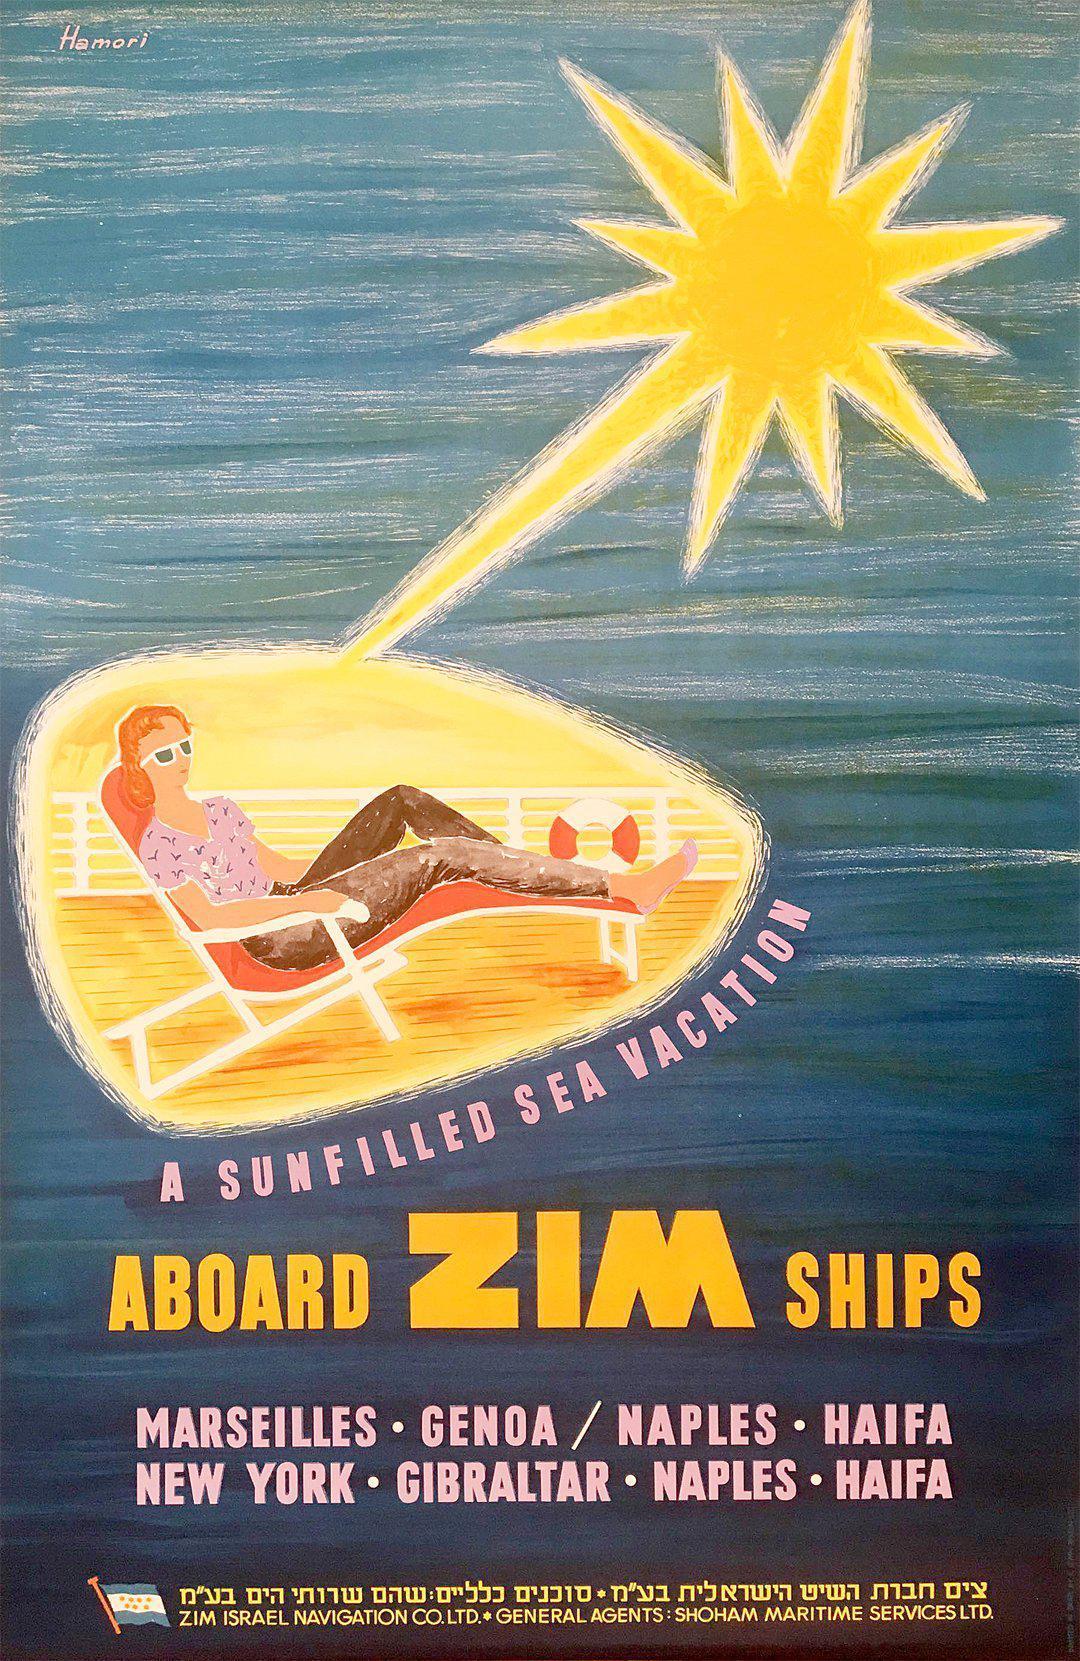 Original Aboard ZIM Ships Israel Vintage Travel Poster by Hamori 1959